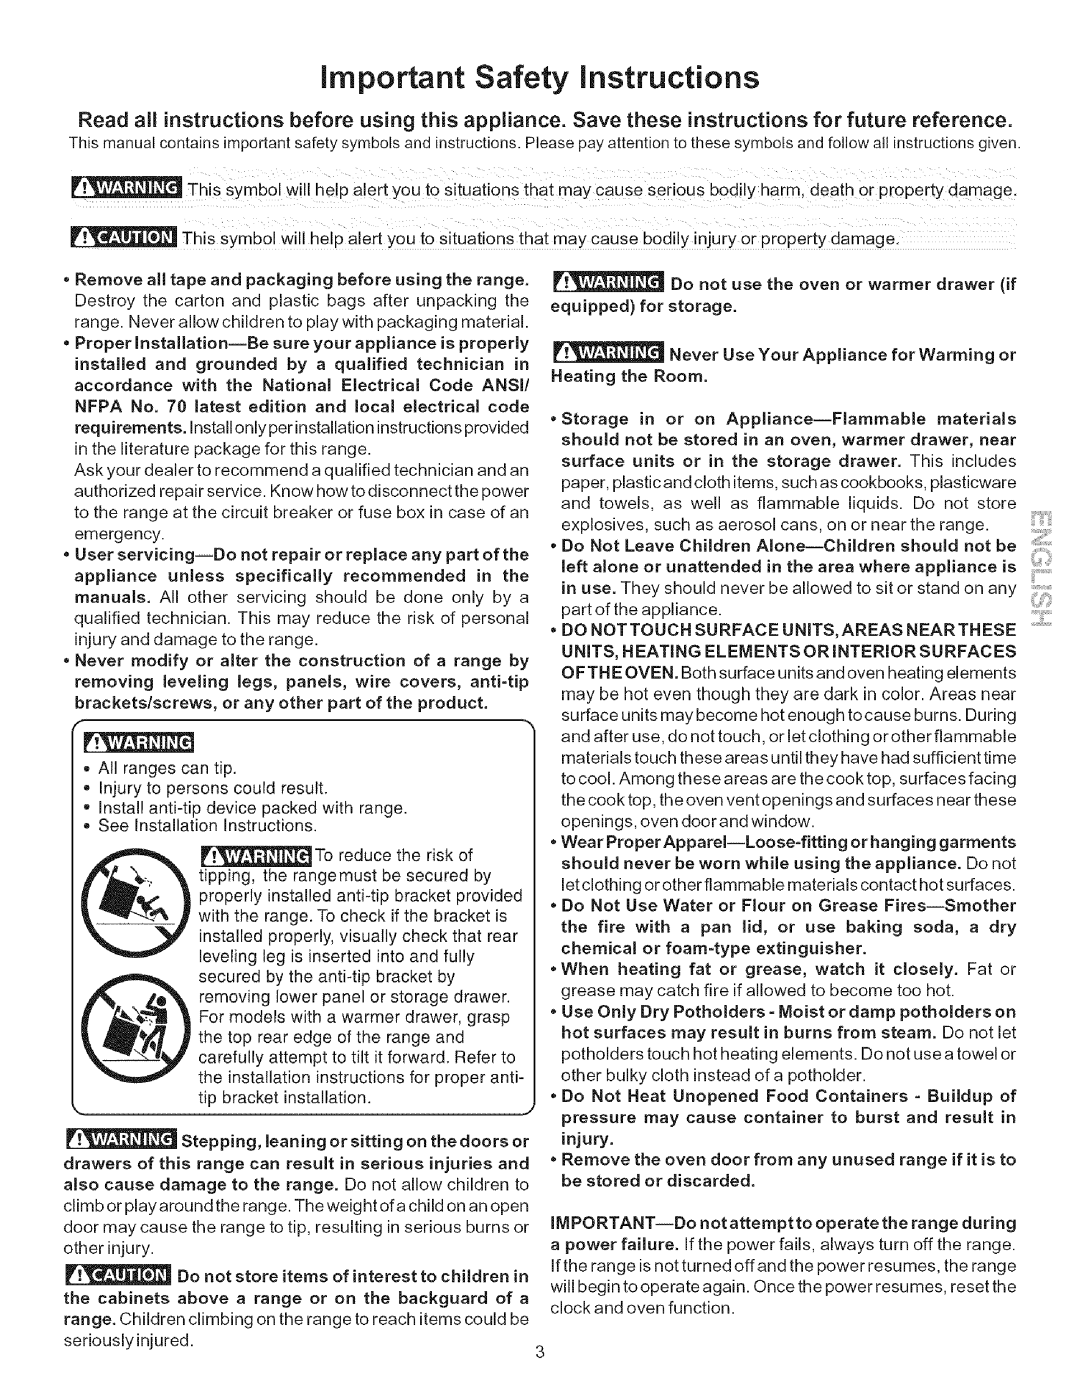 Kenmore 790.9403, 790.9402 manual important Safety instructions, inuseTheyshouldneverbeallowedtositorstandonany 